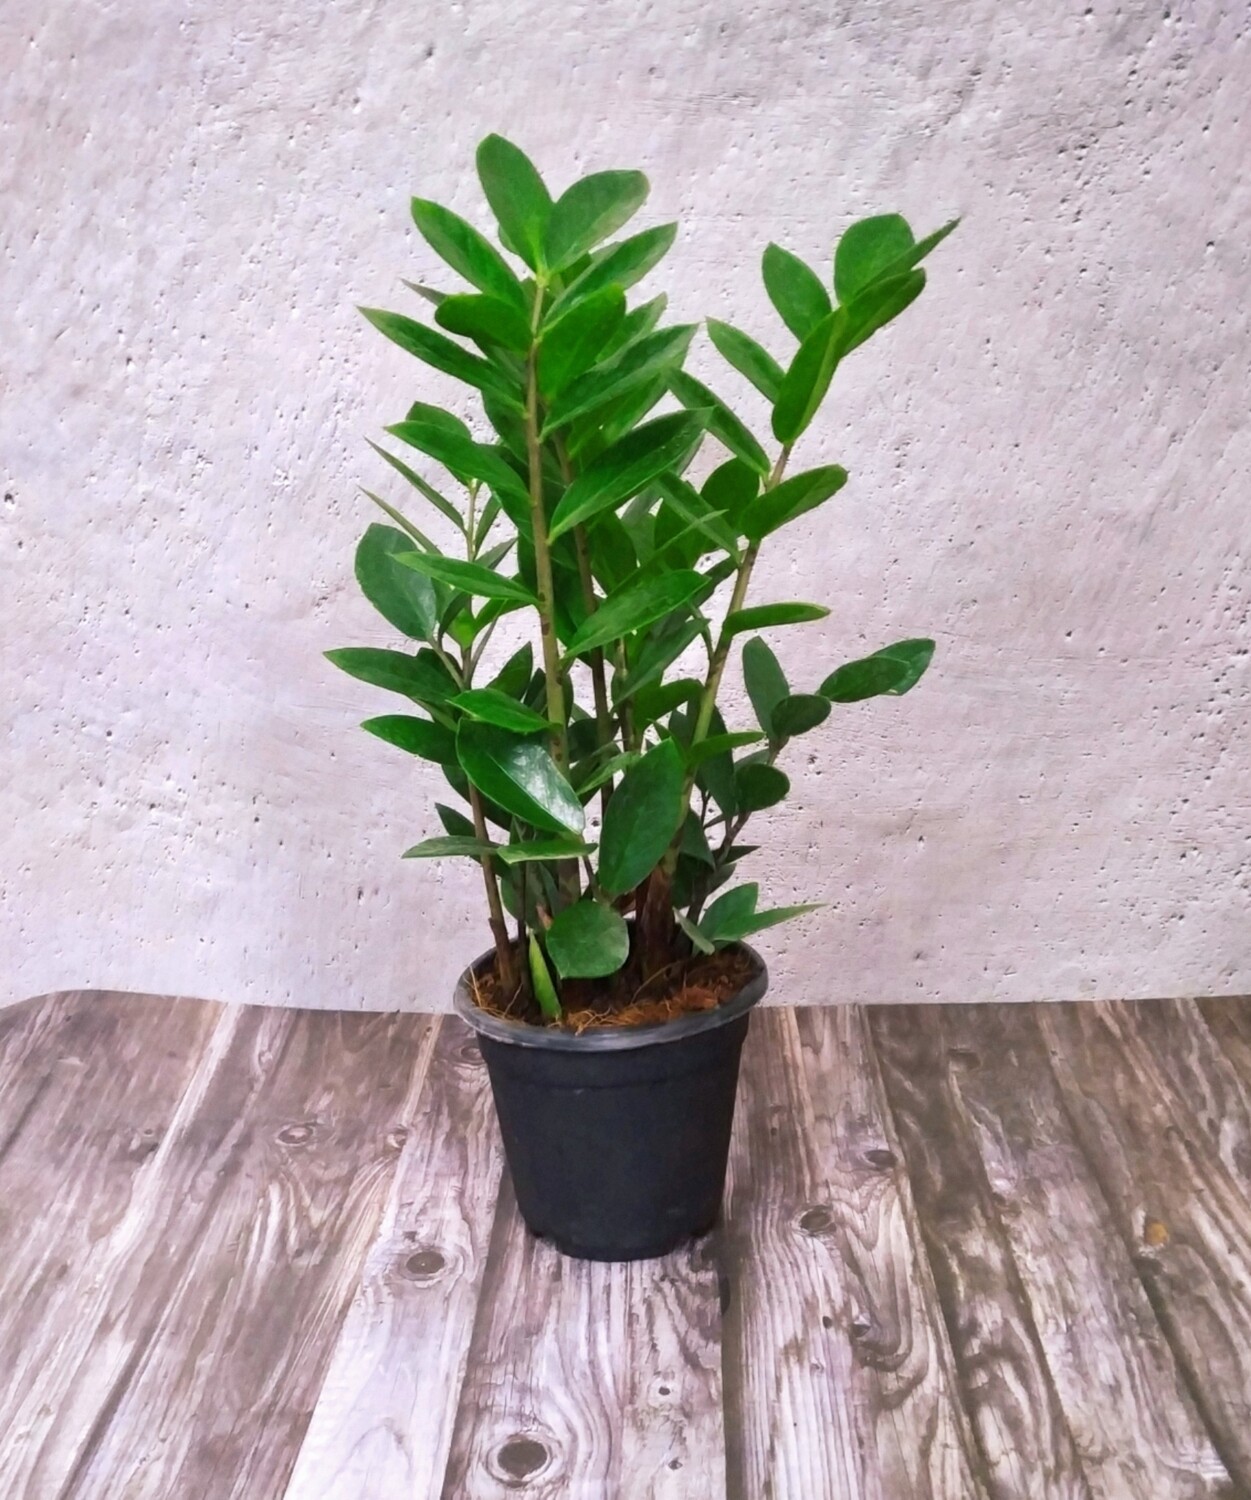 ZZ Plant in 4 inches Nursery Pot